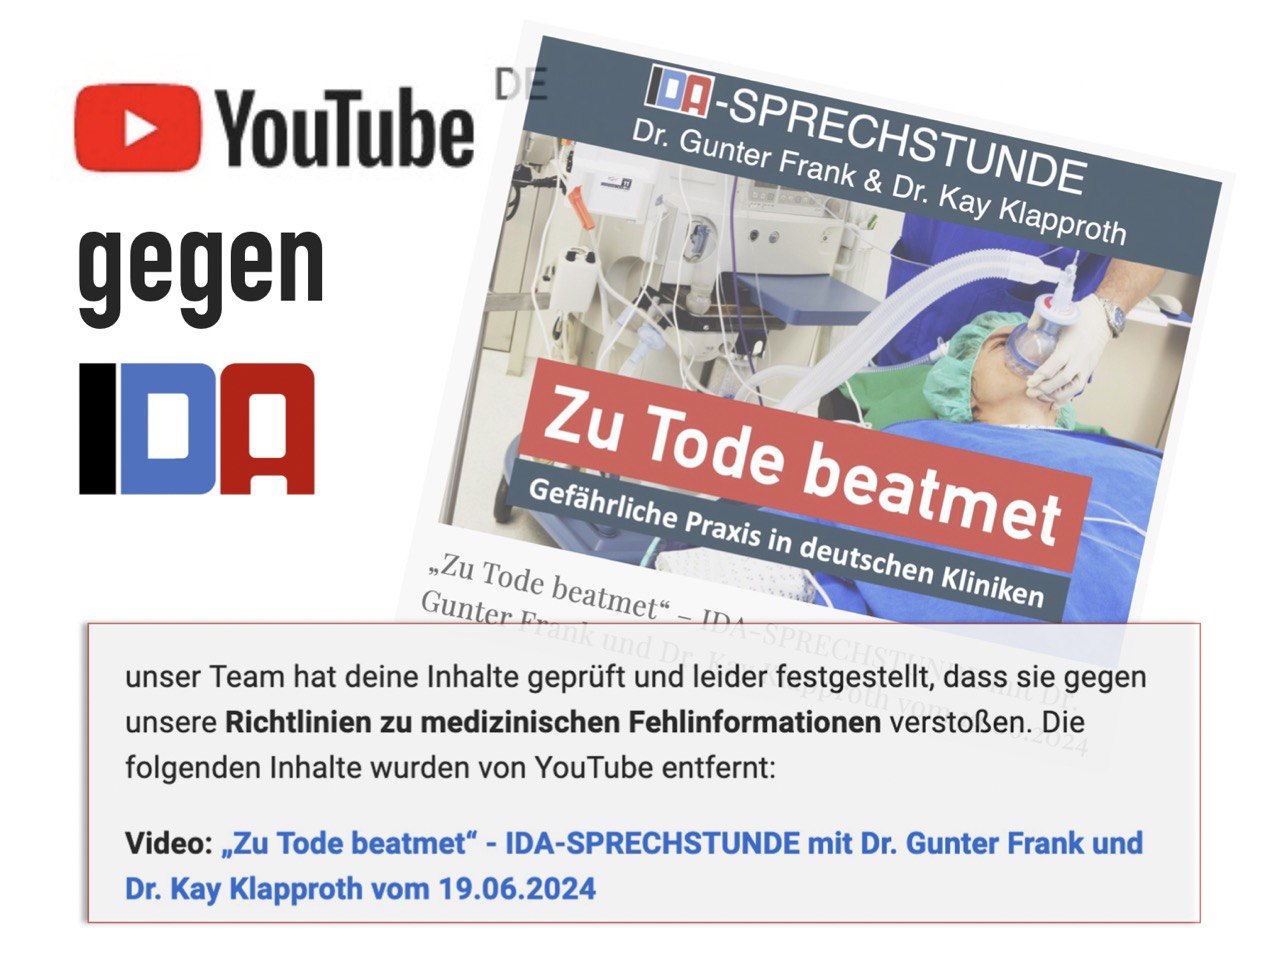 You are currently viewing YouTube gegen IDA! – Unser YouTube-Kanal wurde gesperrt